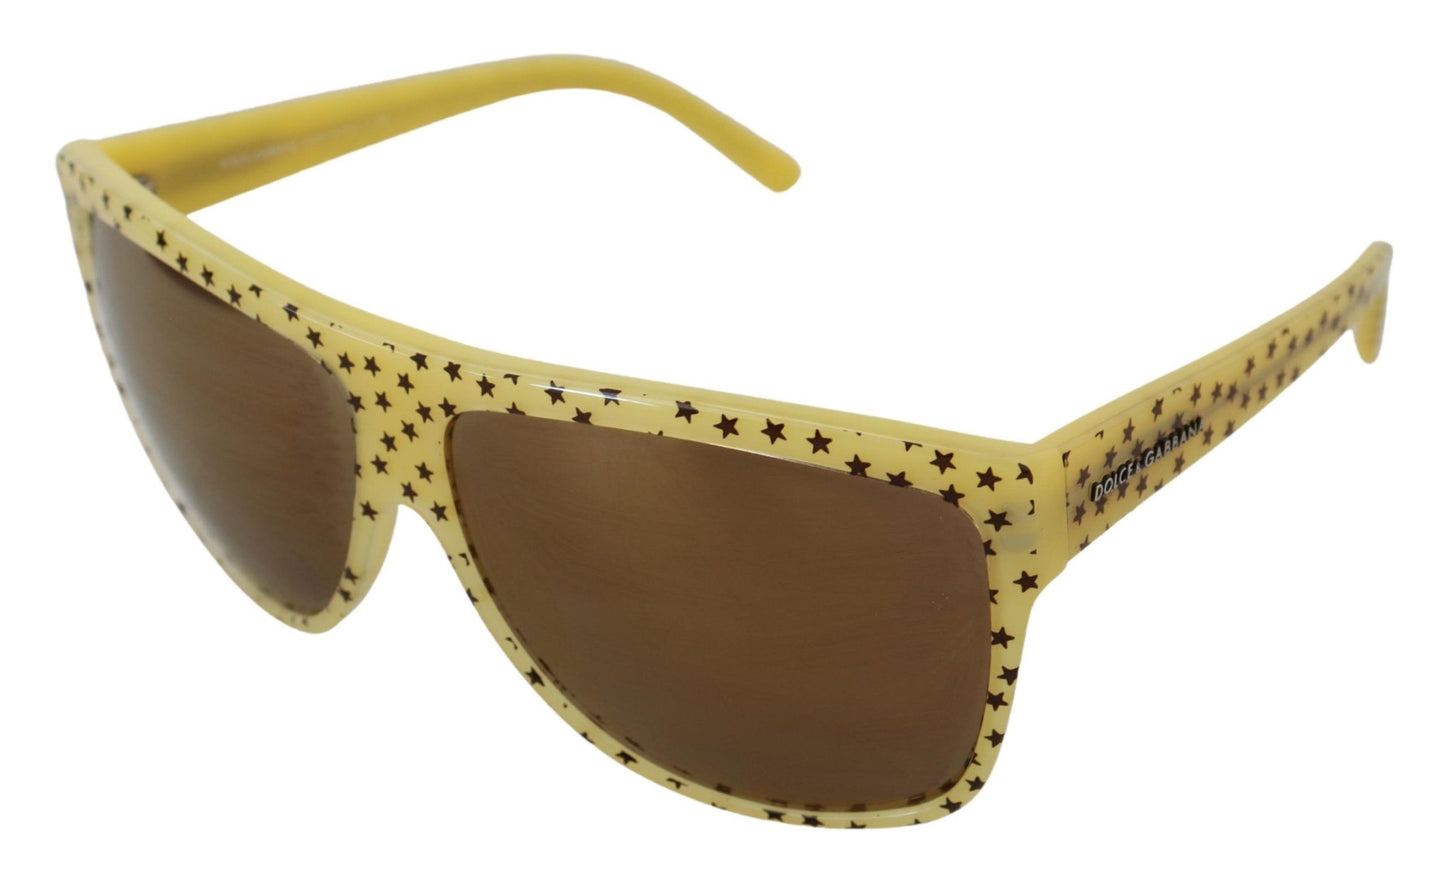 Stellar Chic Square Sunglasses in Yellow